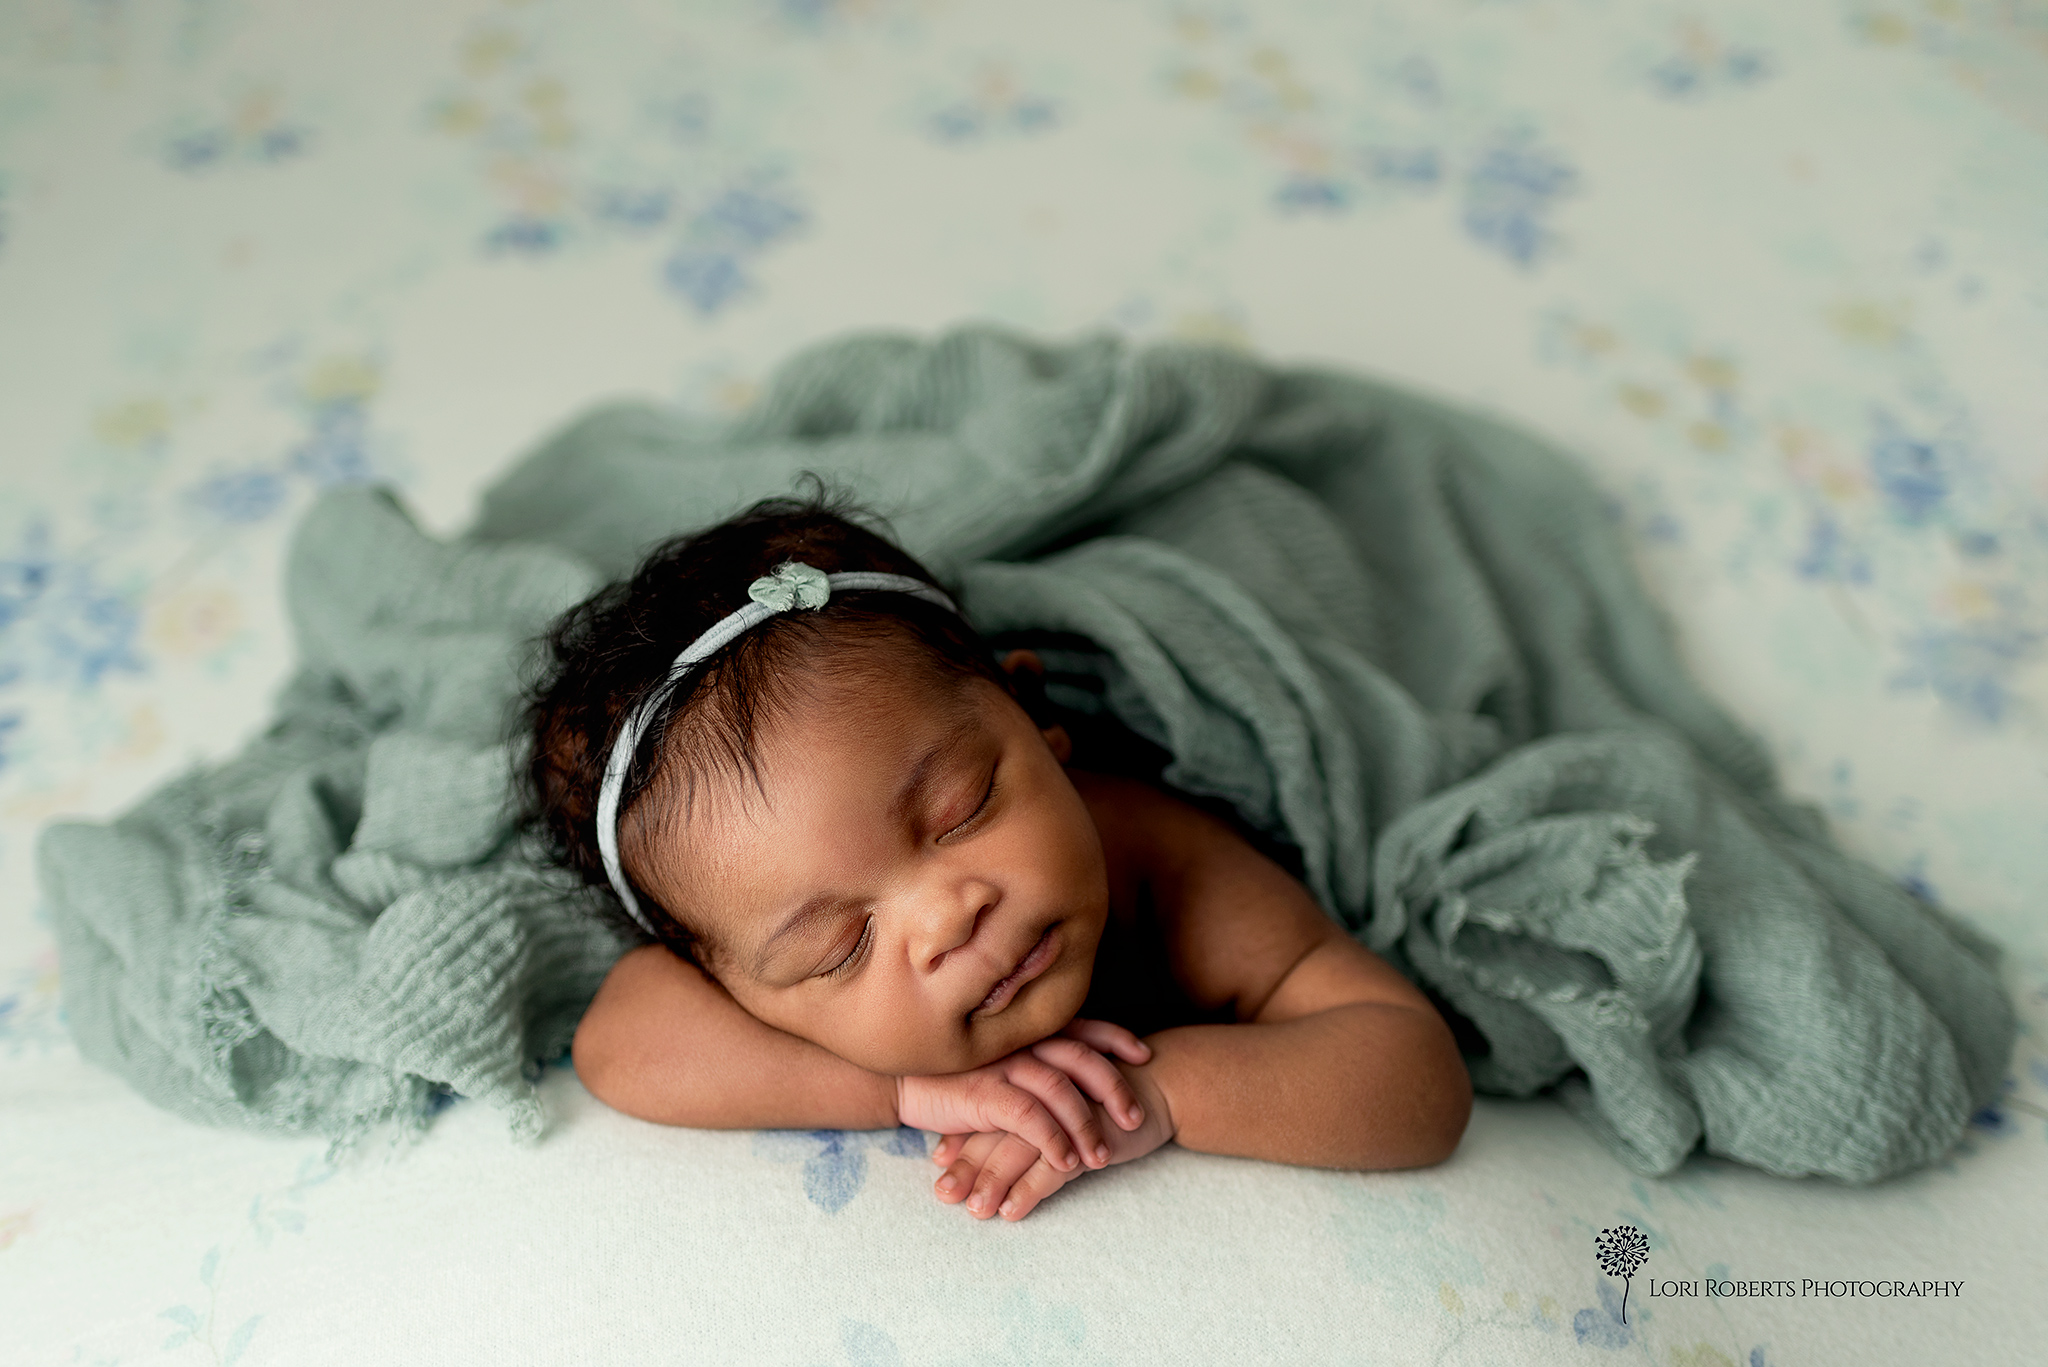 newborn photography prep guide